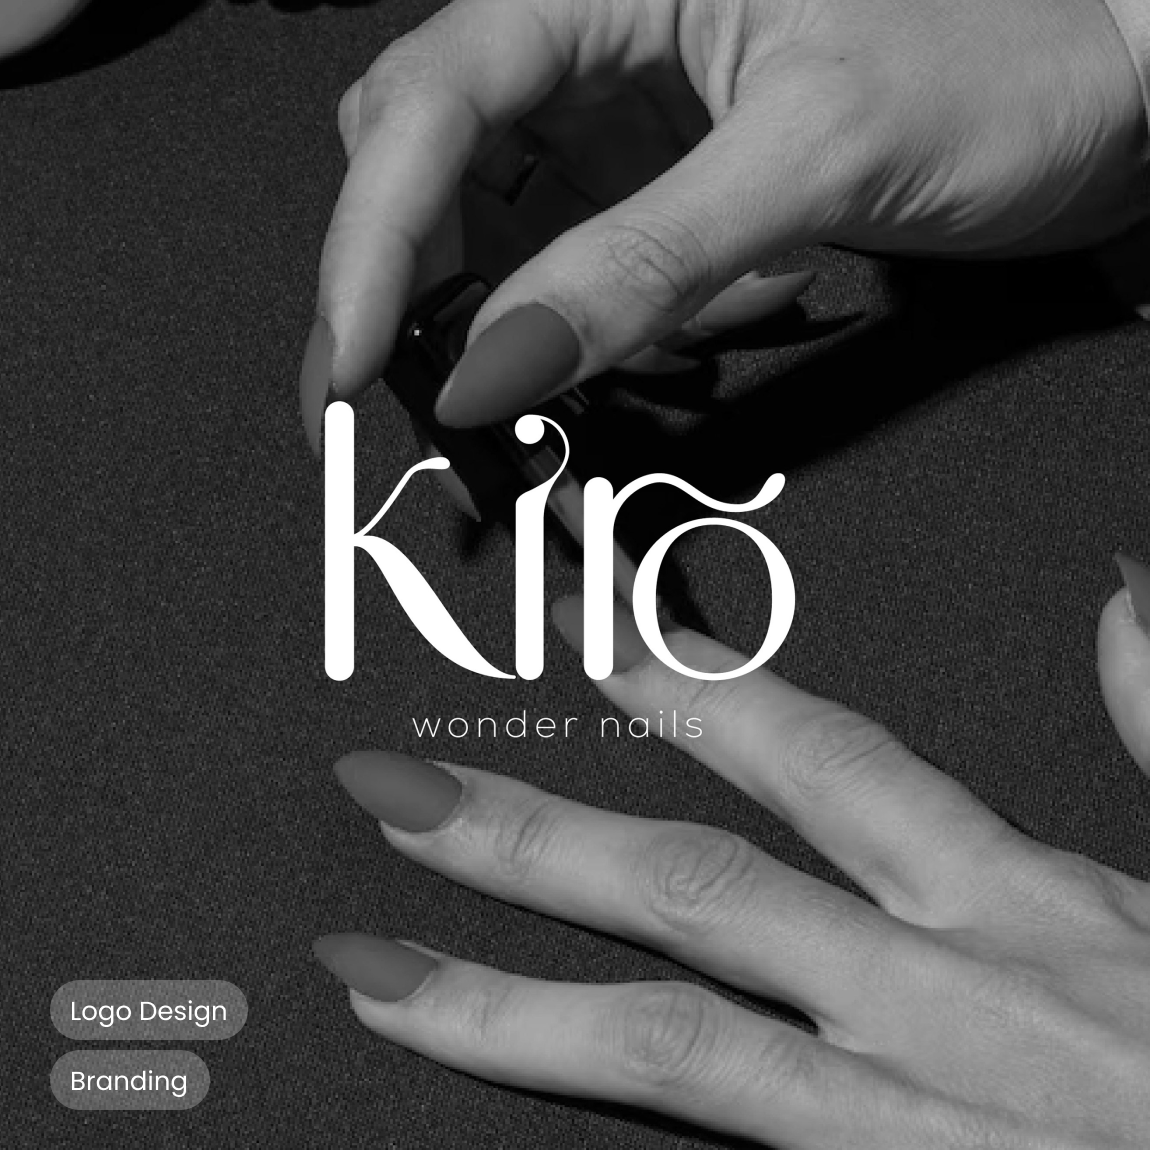 kiro wonder nails